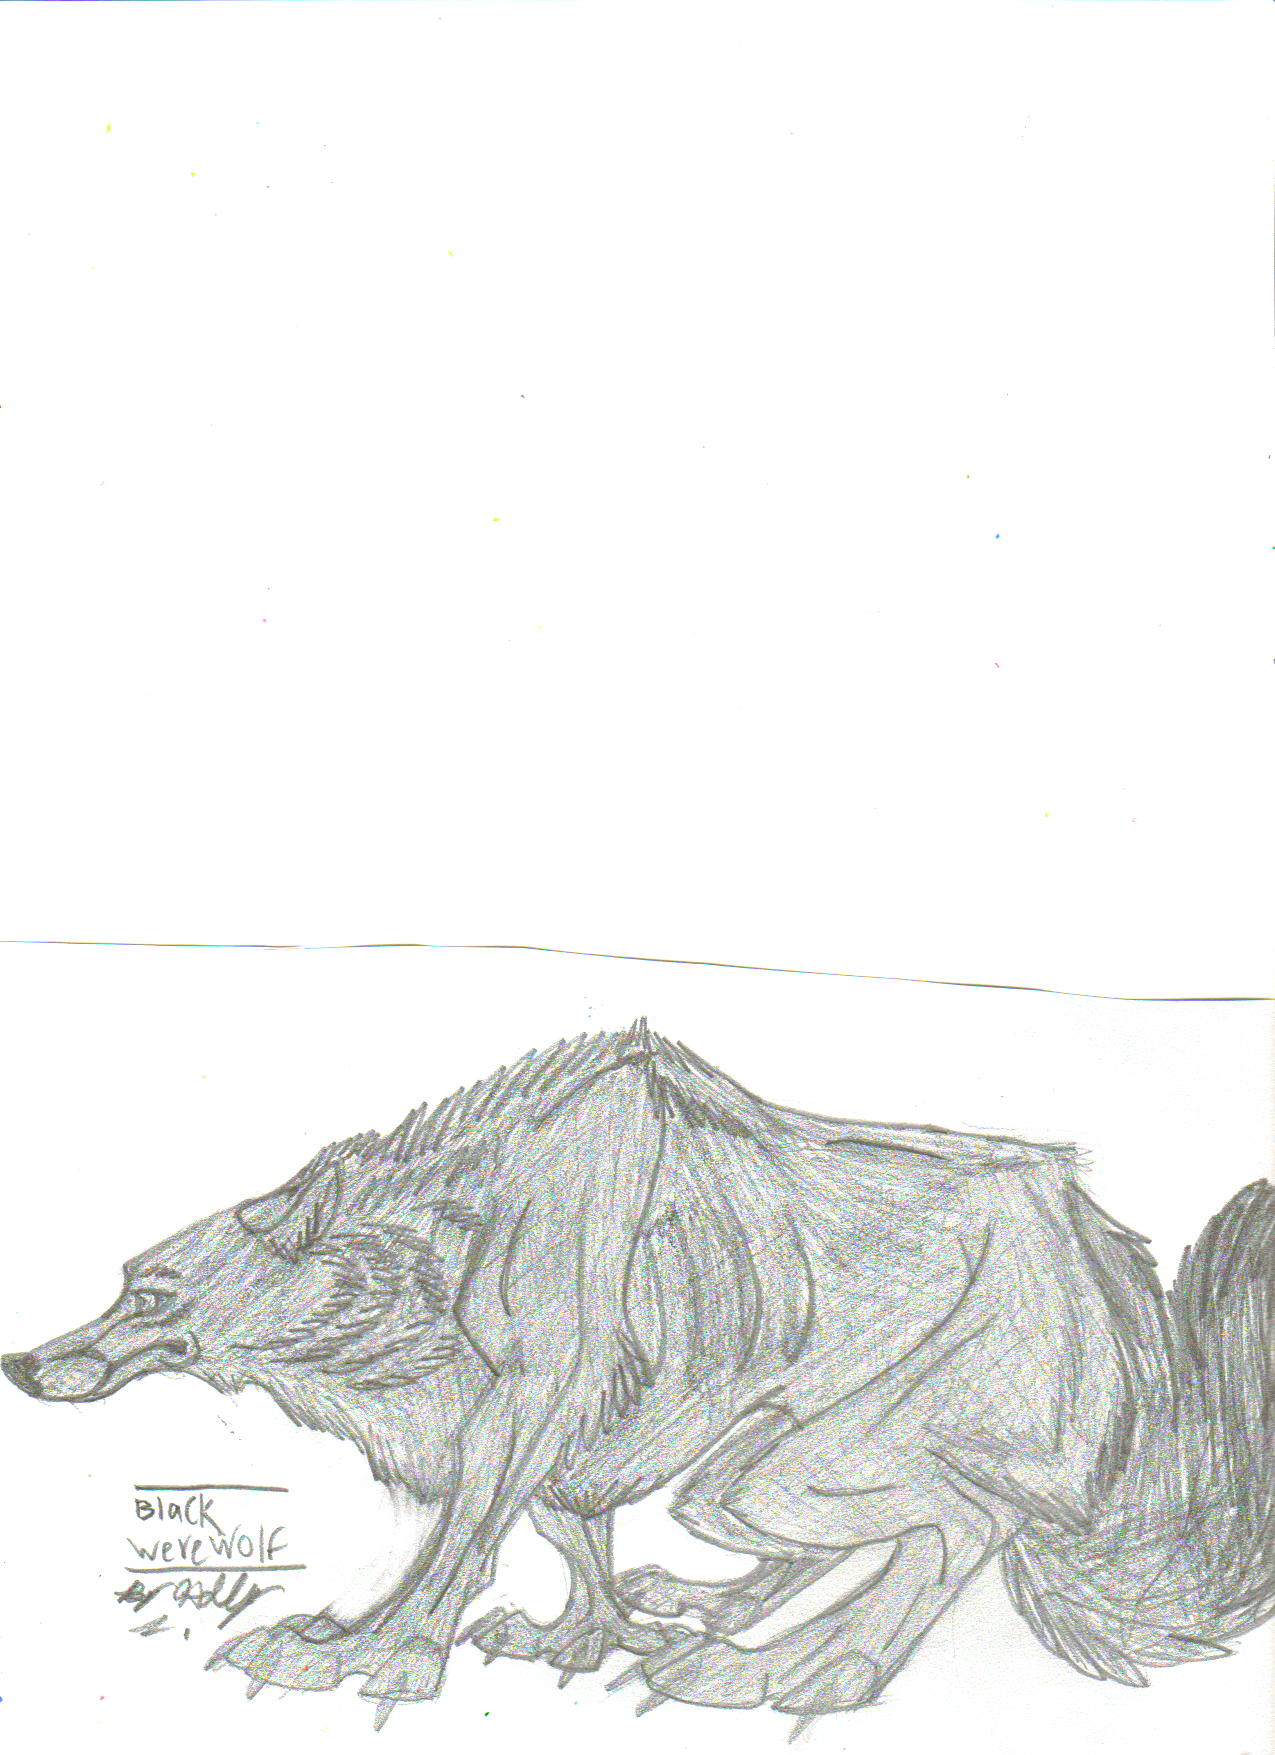 Black Werewolf by hawaiifan